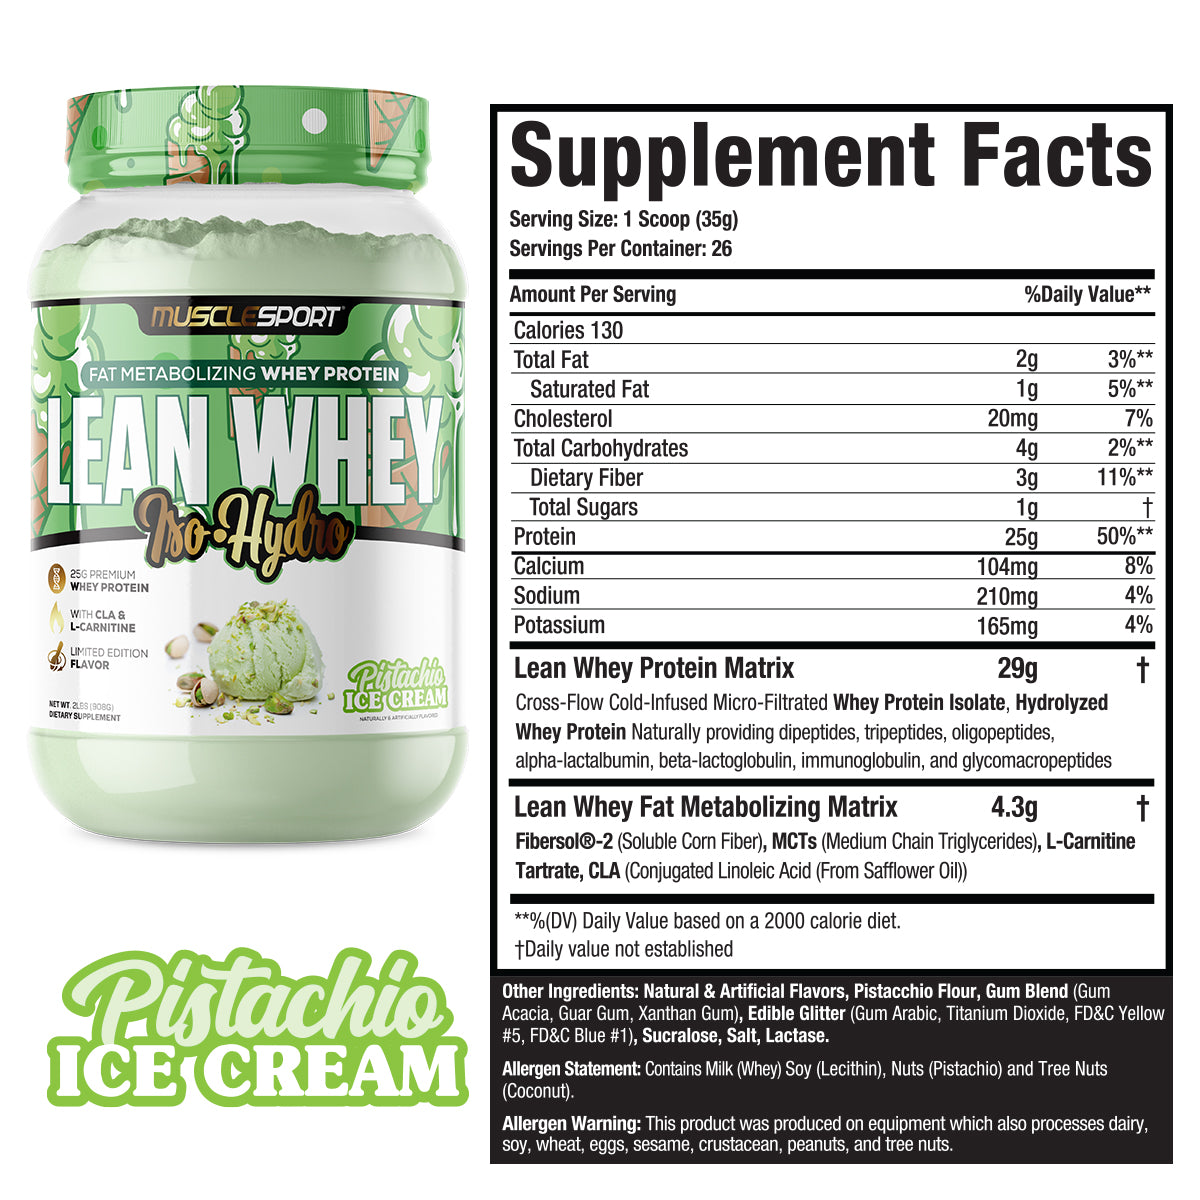 Pistachio Ice Cream Lean Whey Supplement Facts